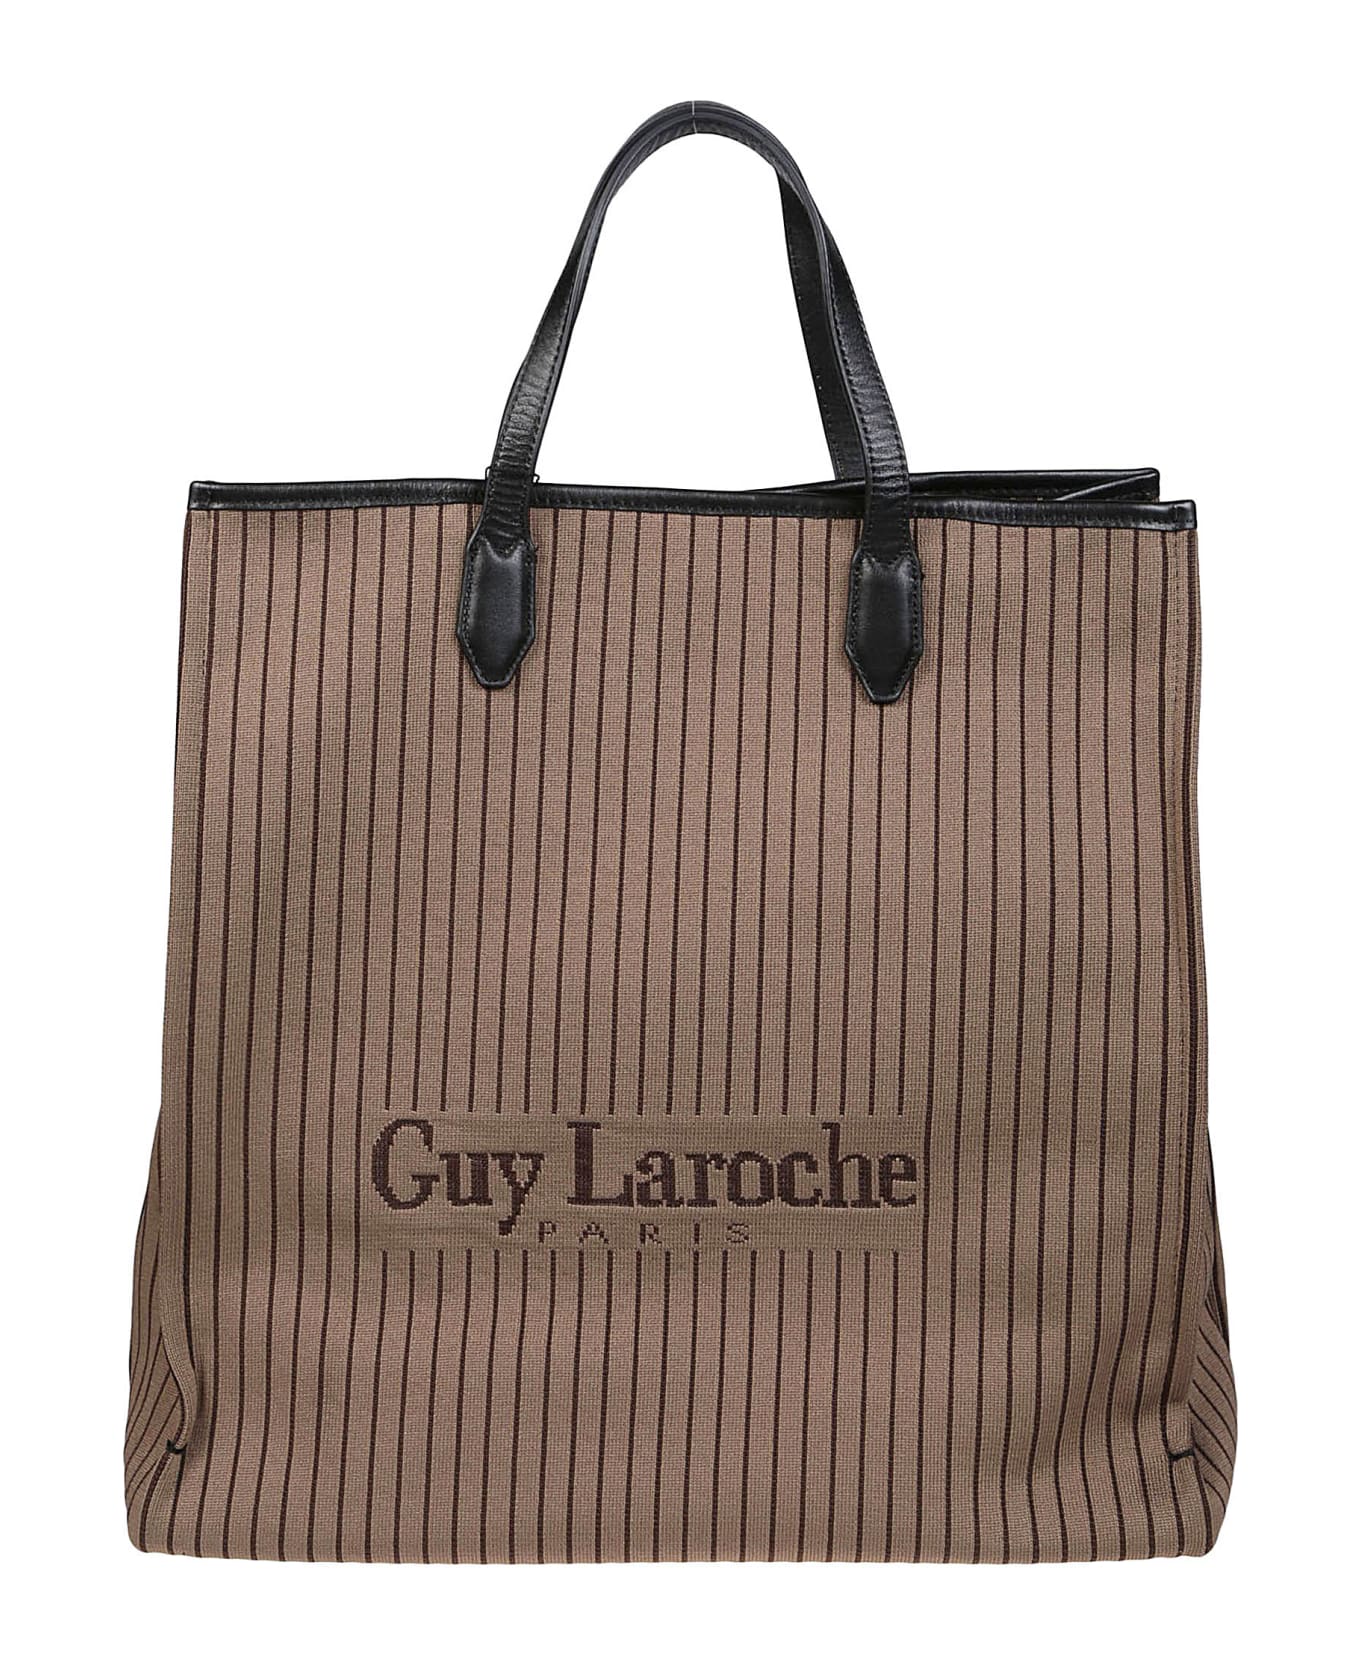 Guy Laroche Large Tote Bag - Brown